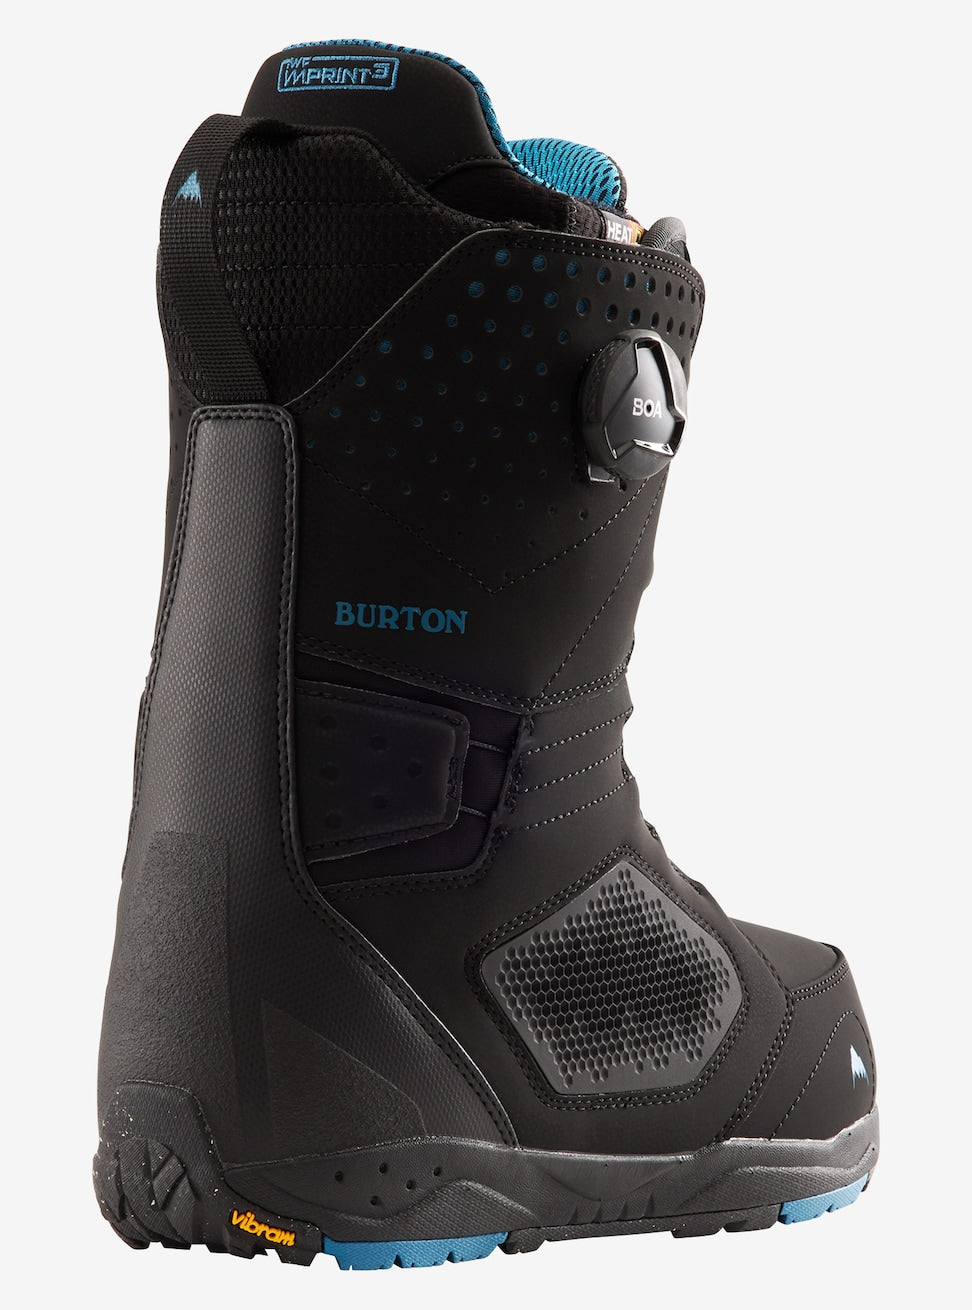 Men's Photon Boa Snowboard Boots - Wide